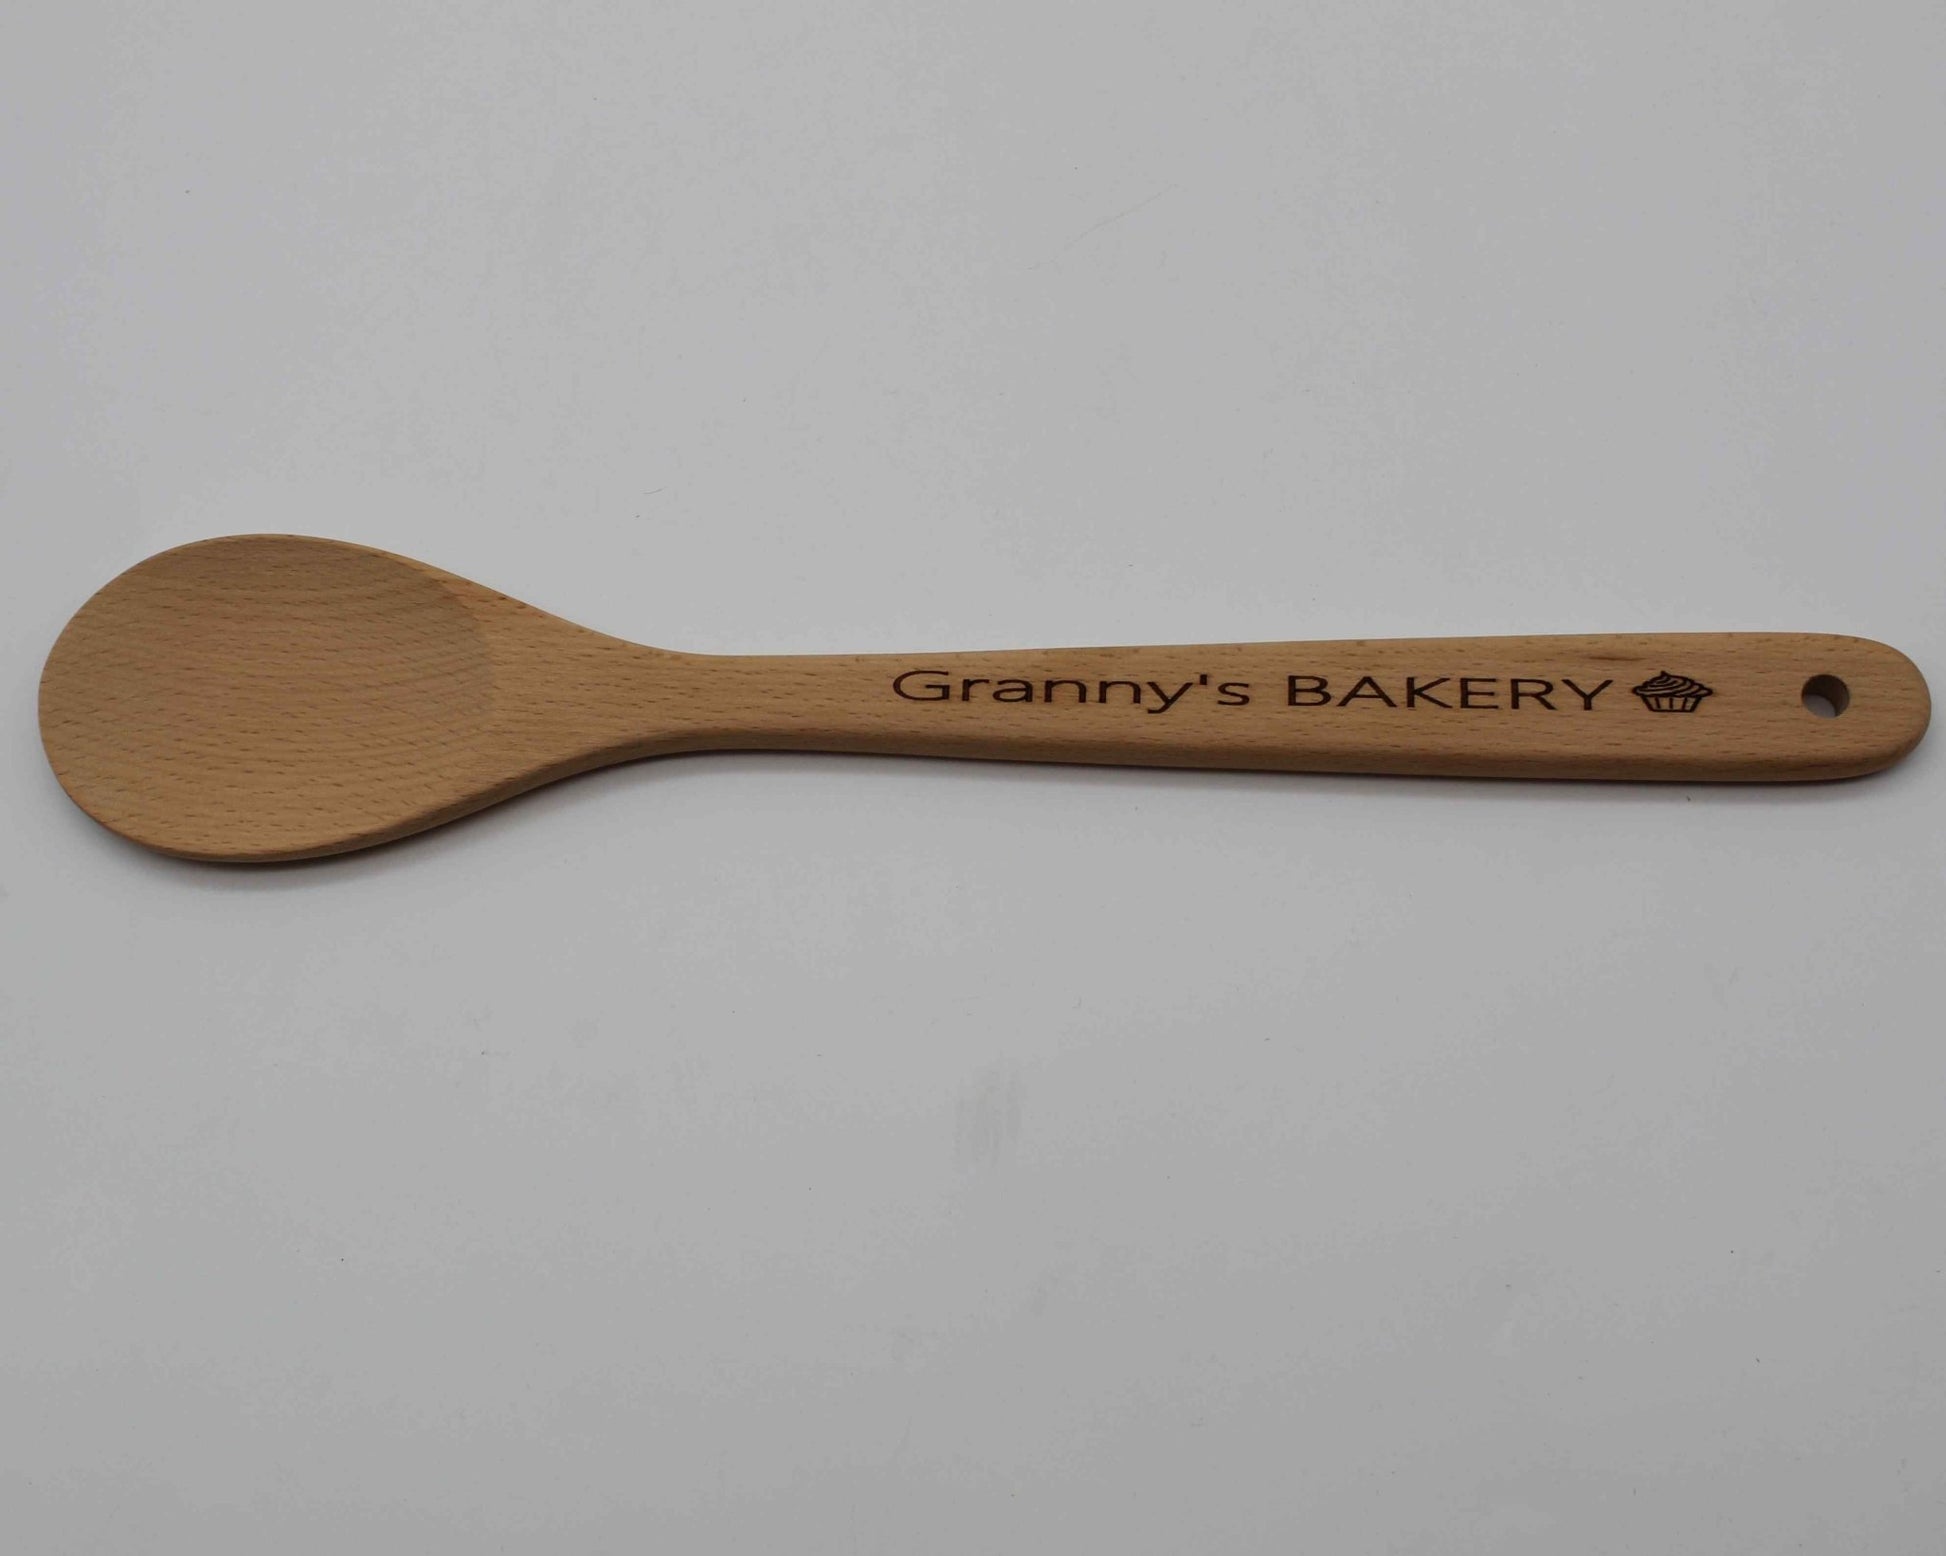 Wooden Spoon Engraved Set 1 Mum, Grandma, etc - Haisley Design